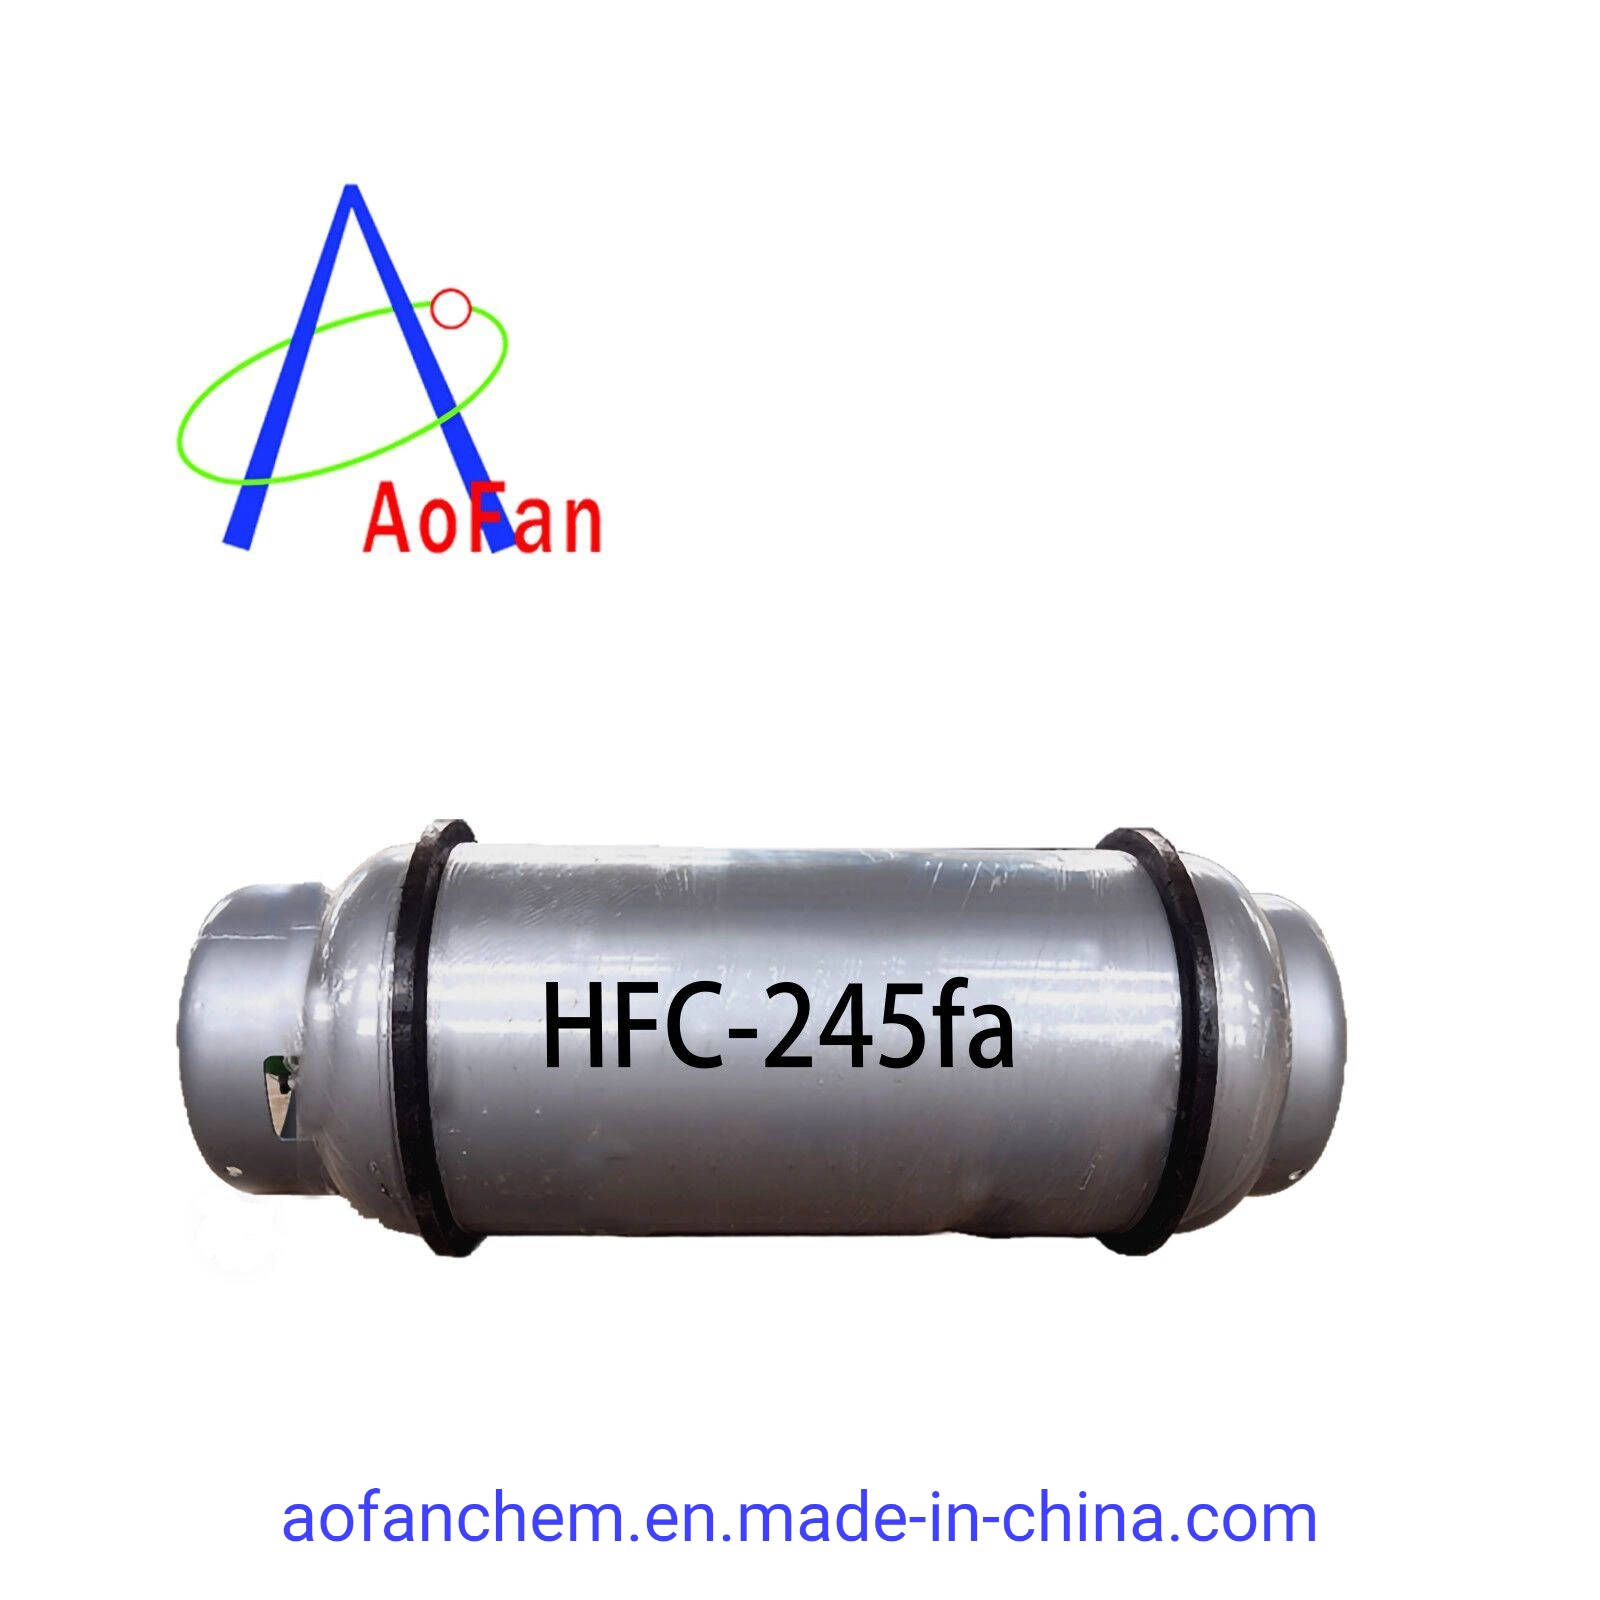 precio de fábrica China de refrigerante de flúor fabricante chino de China, el HFC-245fa